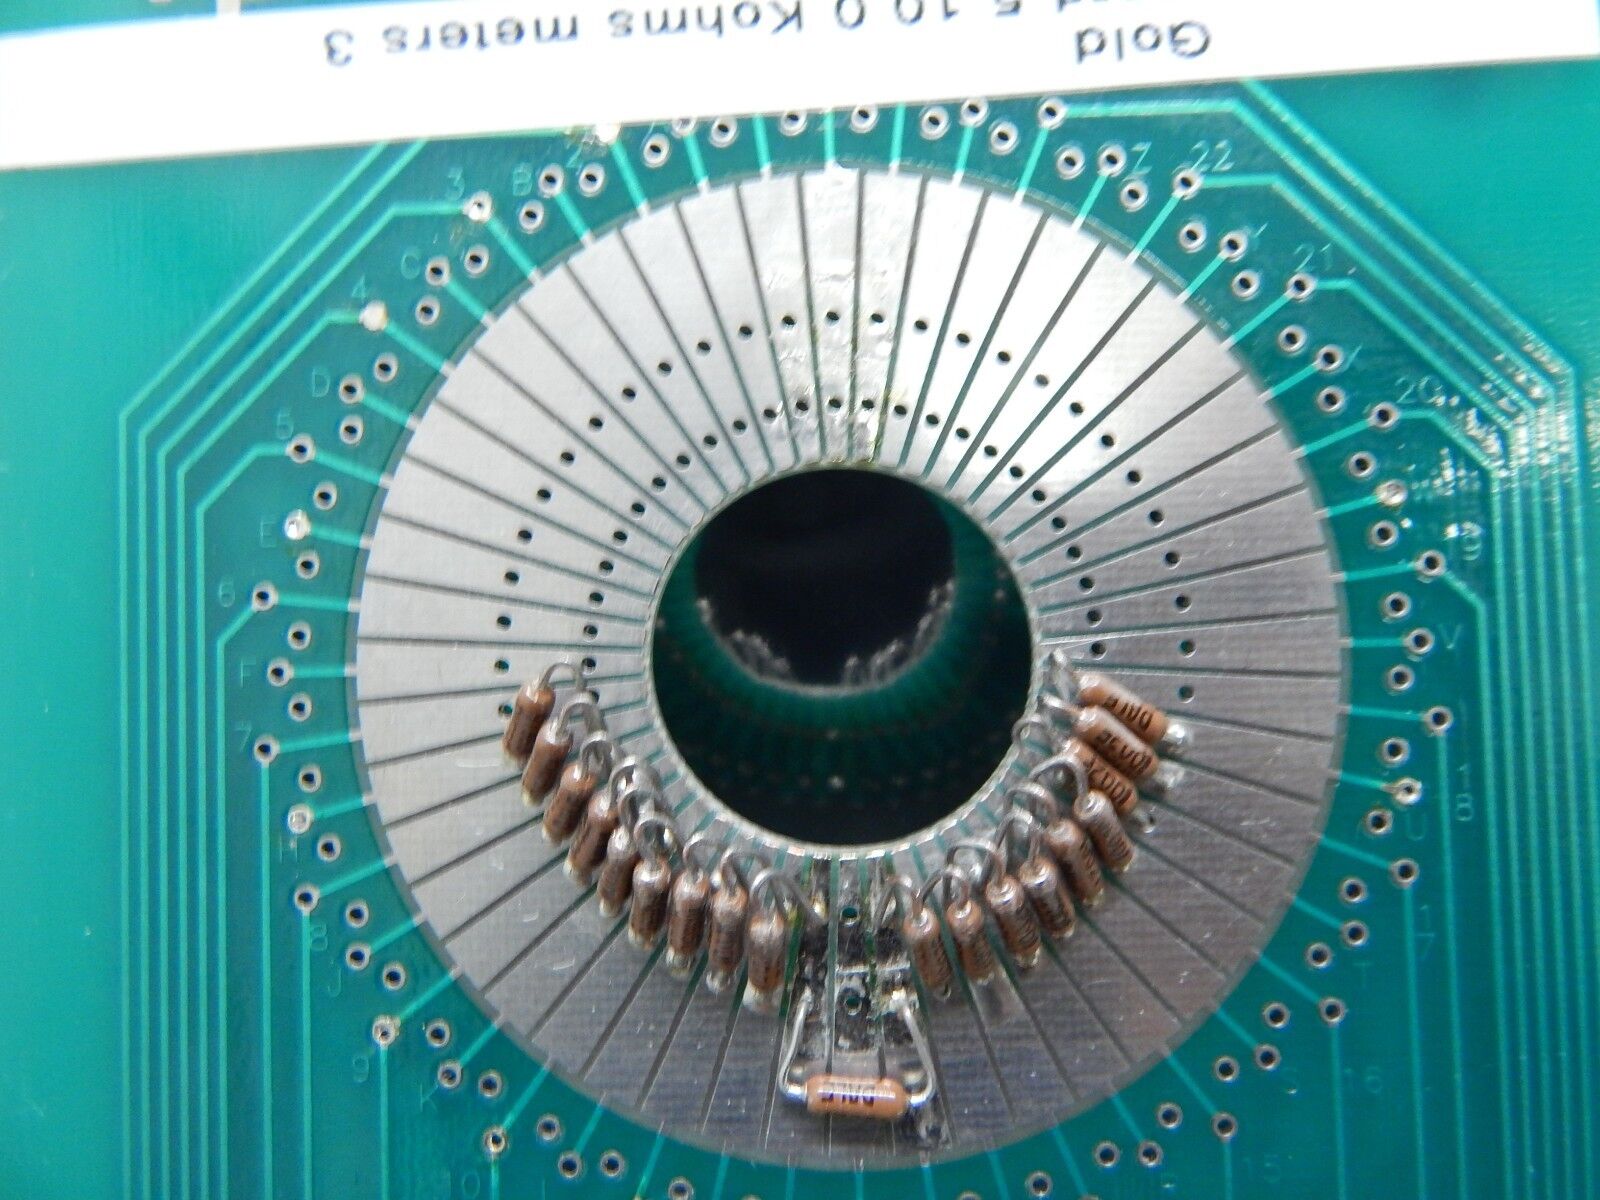 Alphatronics Gold Card 5 Probe Card PCB Standard B481 10.0 Kohms Meters 3 Used